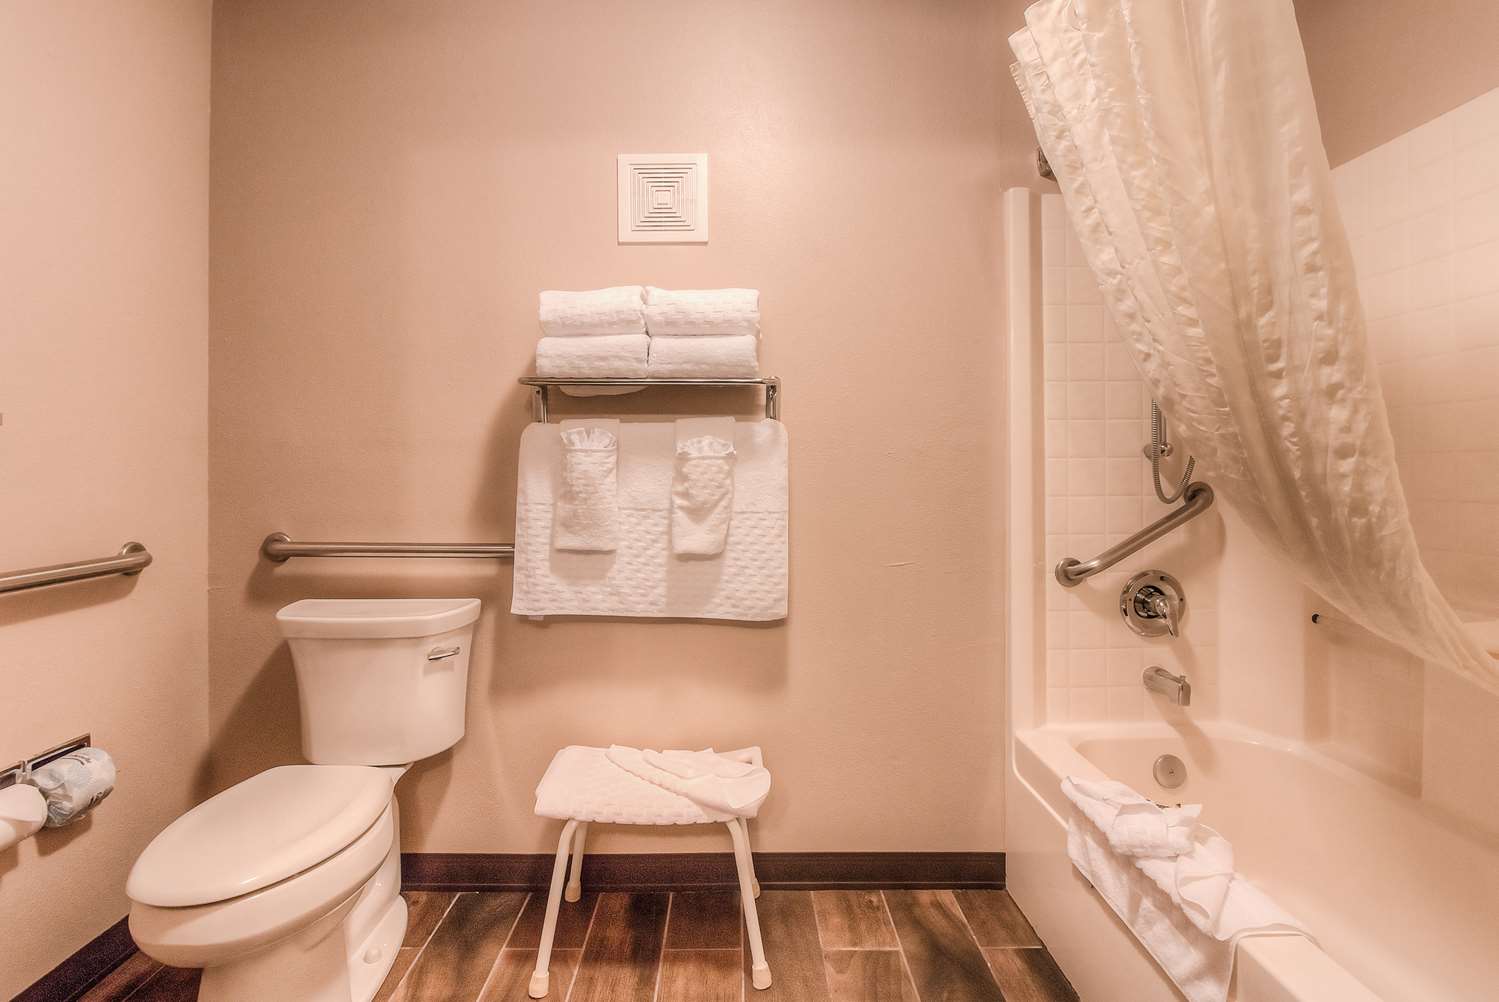 Embroidered Bathroom Hand Towel, Have a Nice Poop, White Towel, Choose  Thread Color, Cute Bathroom Decor 